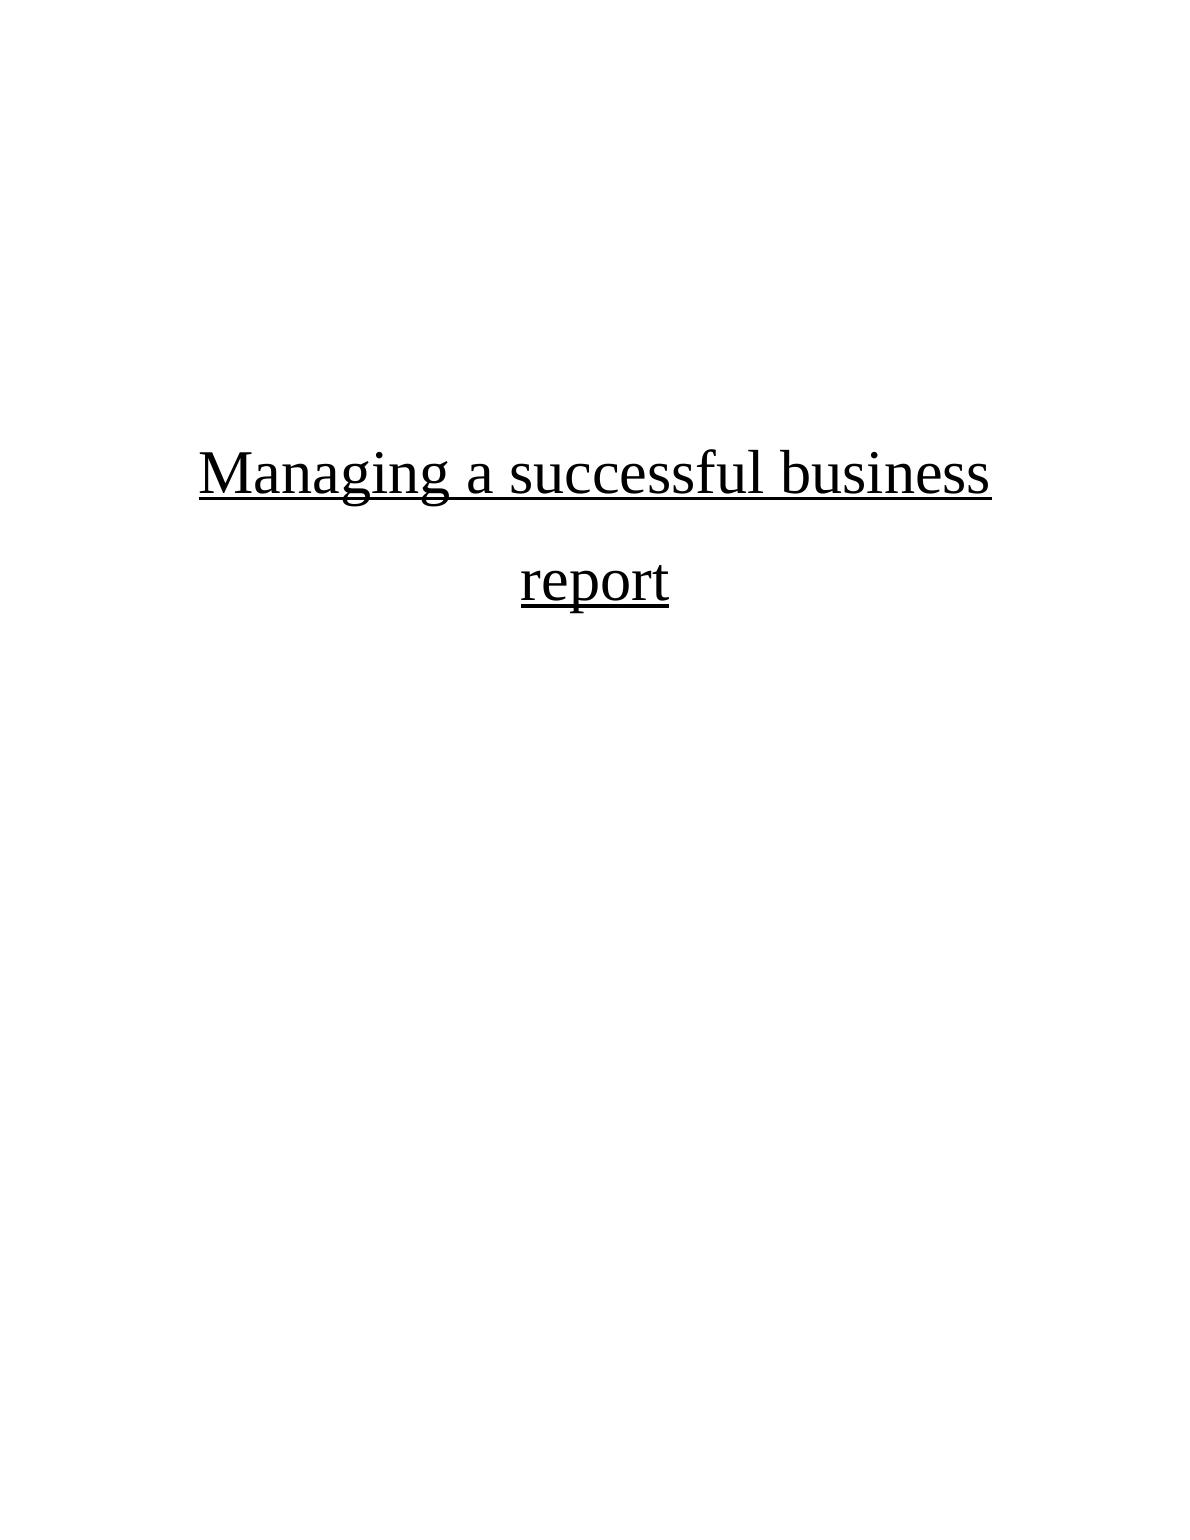 Managing a successful business - Zara Assignment_1